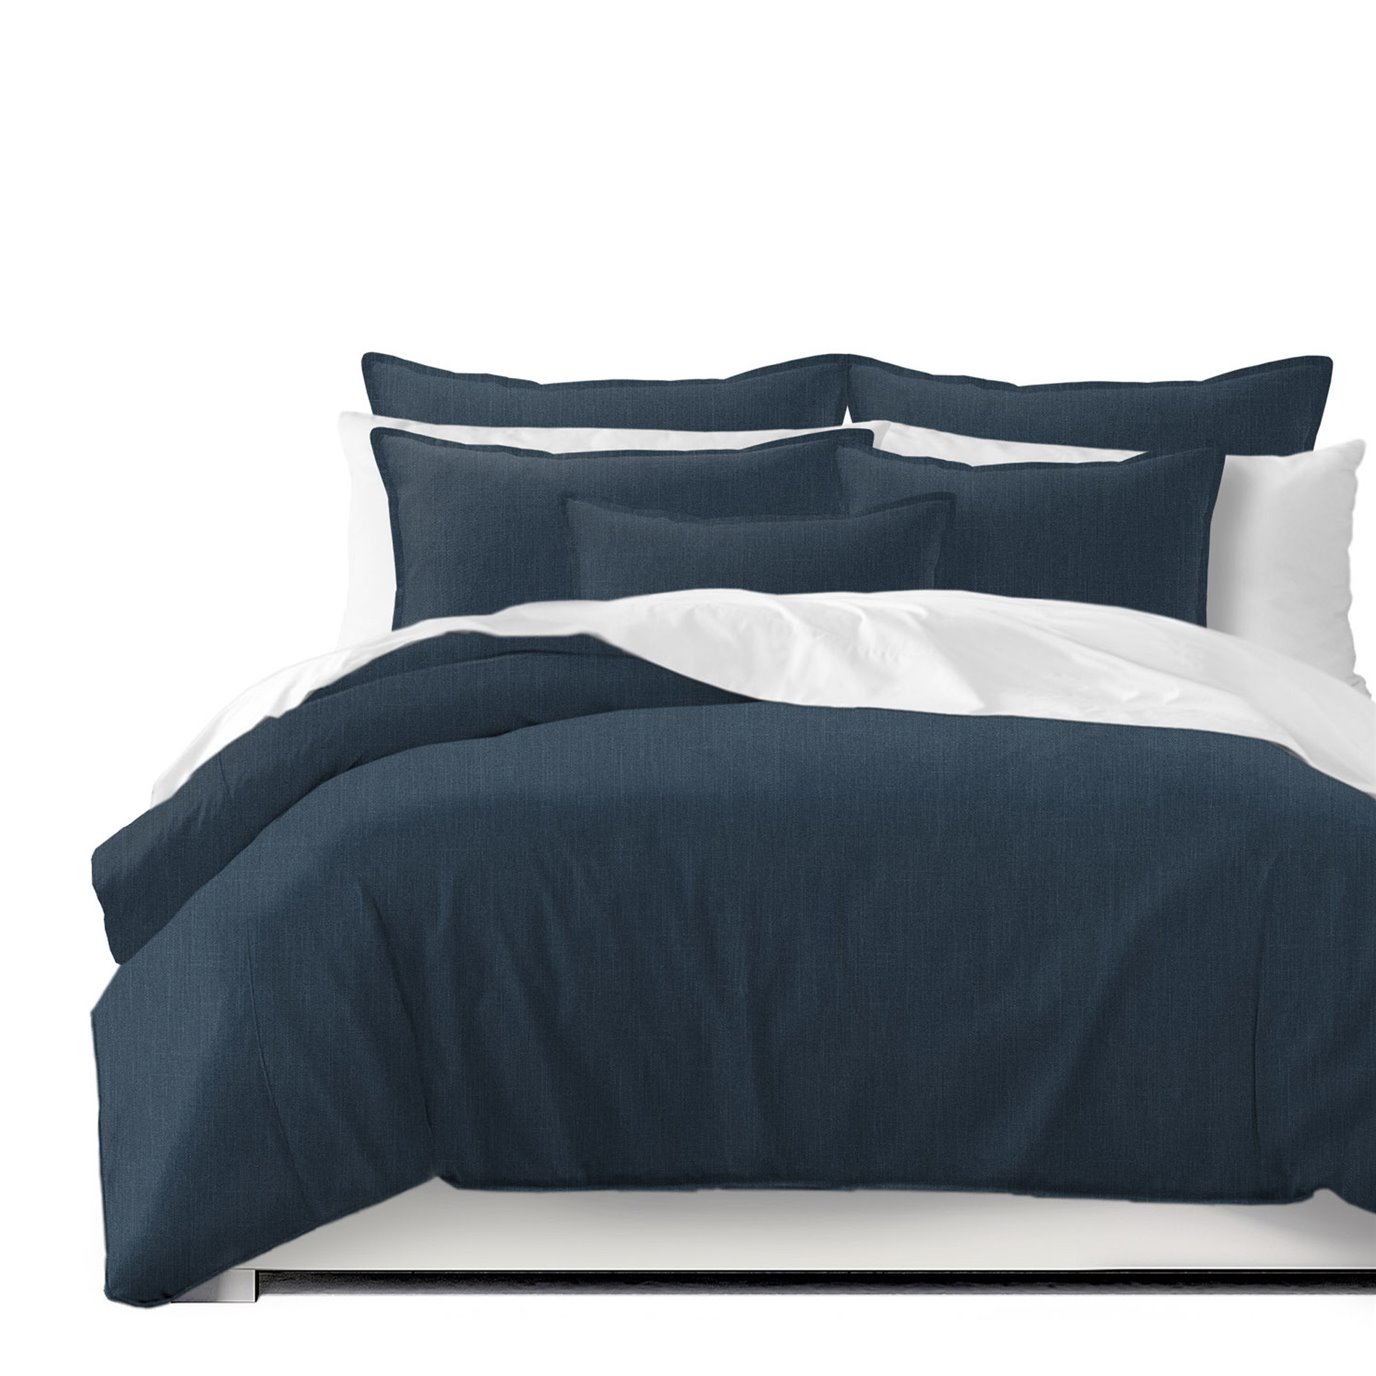 Sutton Navy Comforter and Pillow Sham(s) Set - Size King / California King